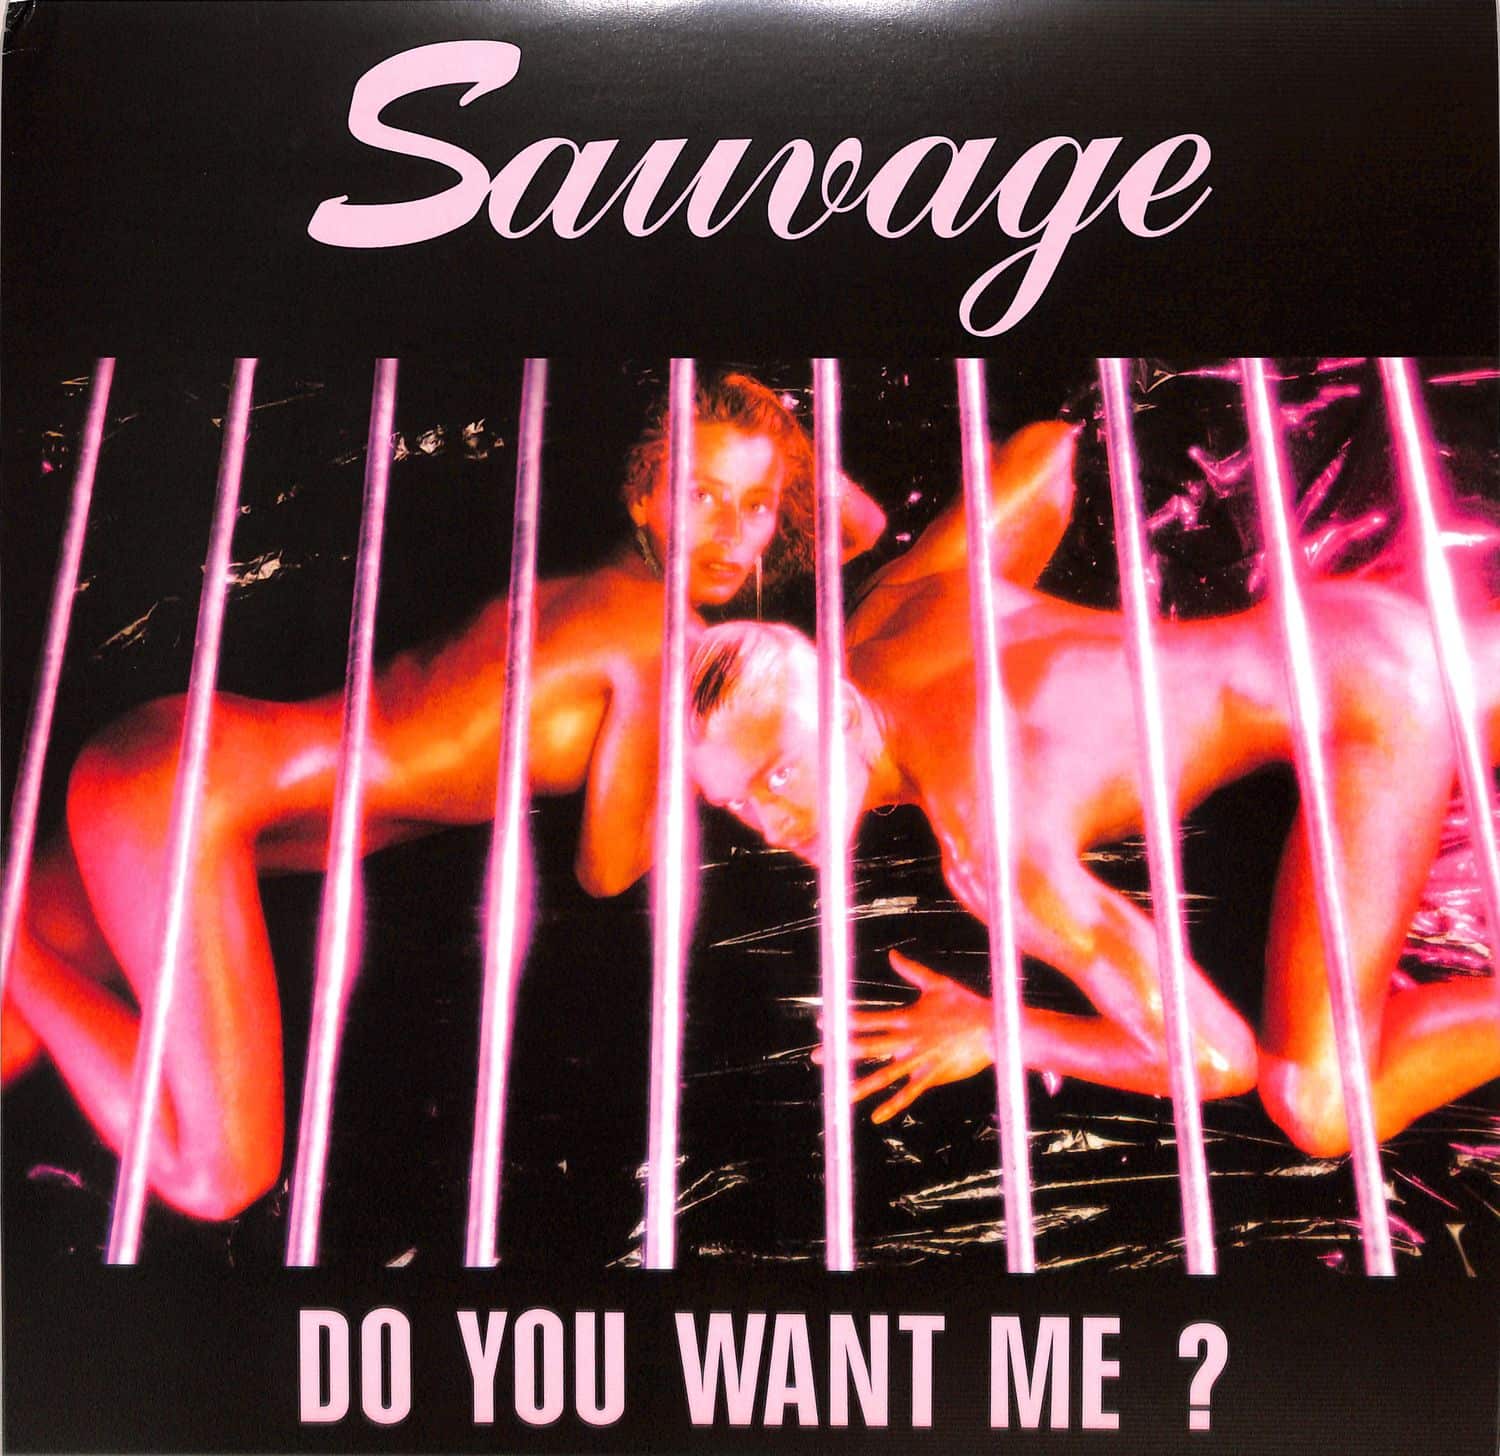 Sauvage - DO YOU WANT ME? 